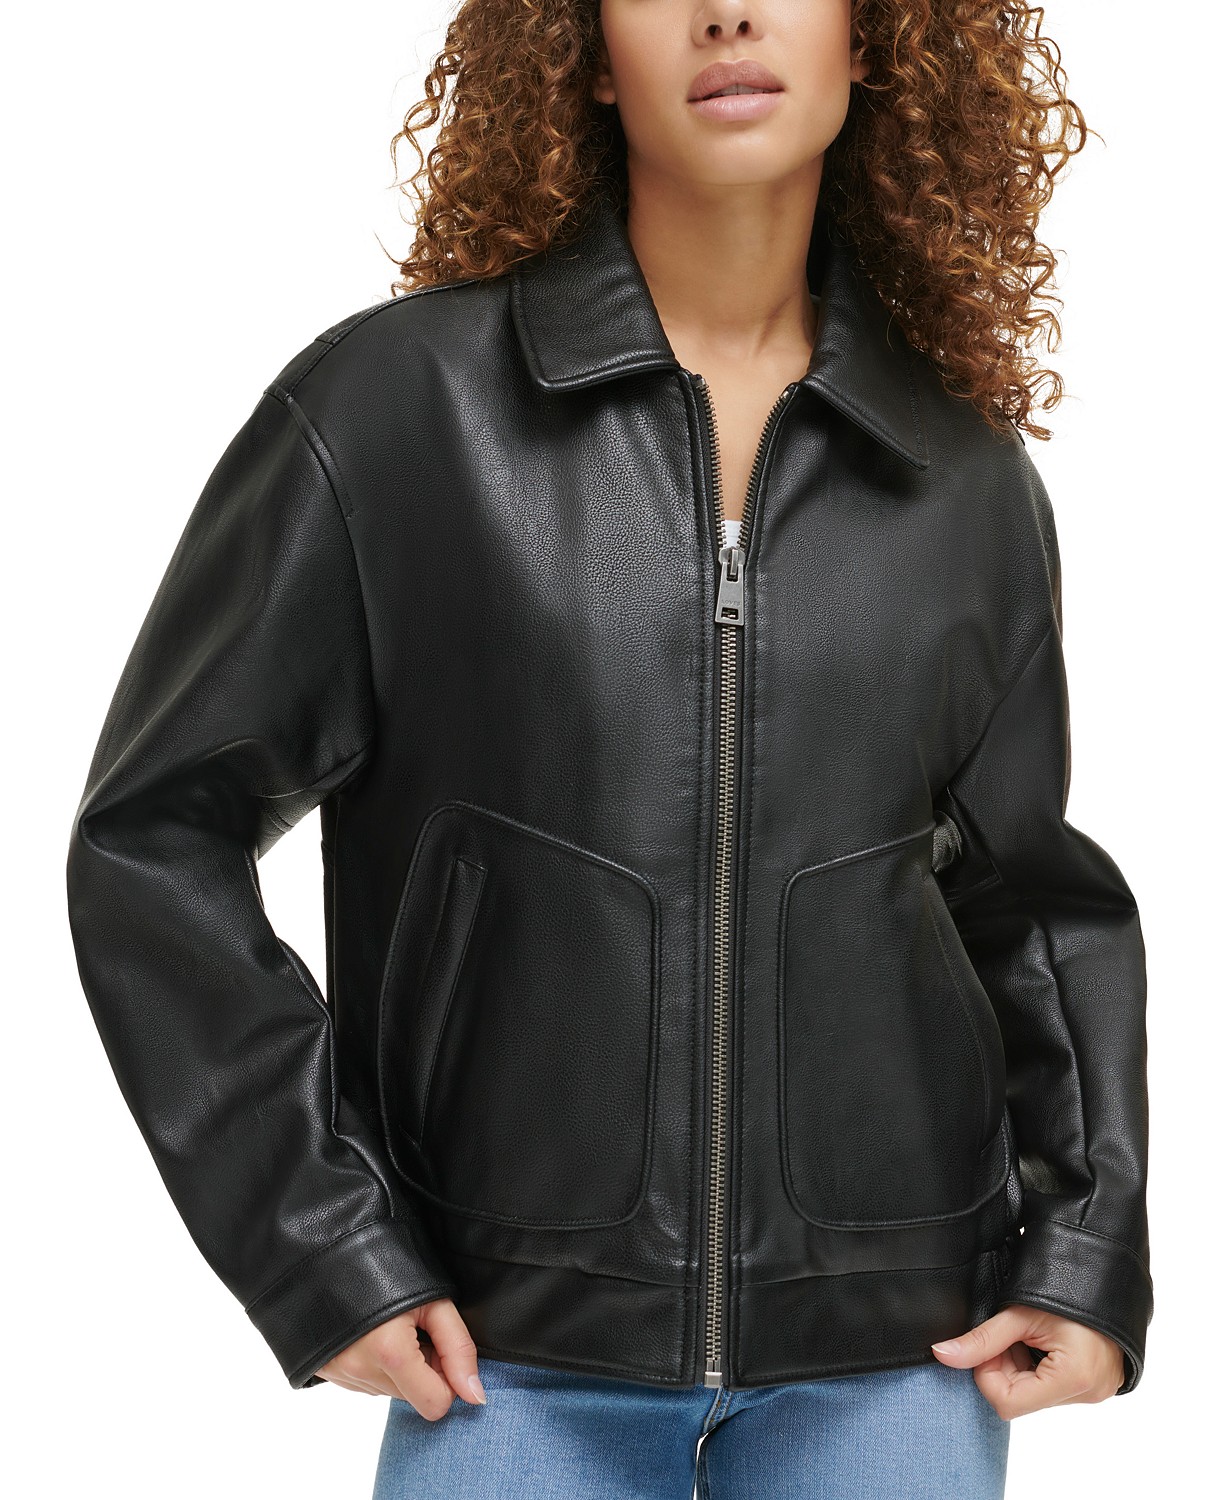 Womens Retro Faux-Leather Bomber Jacket